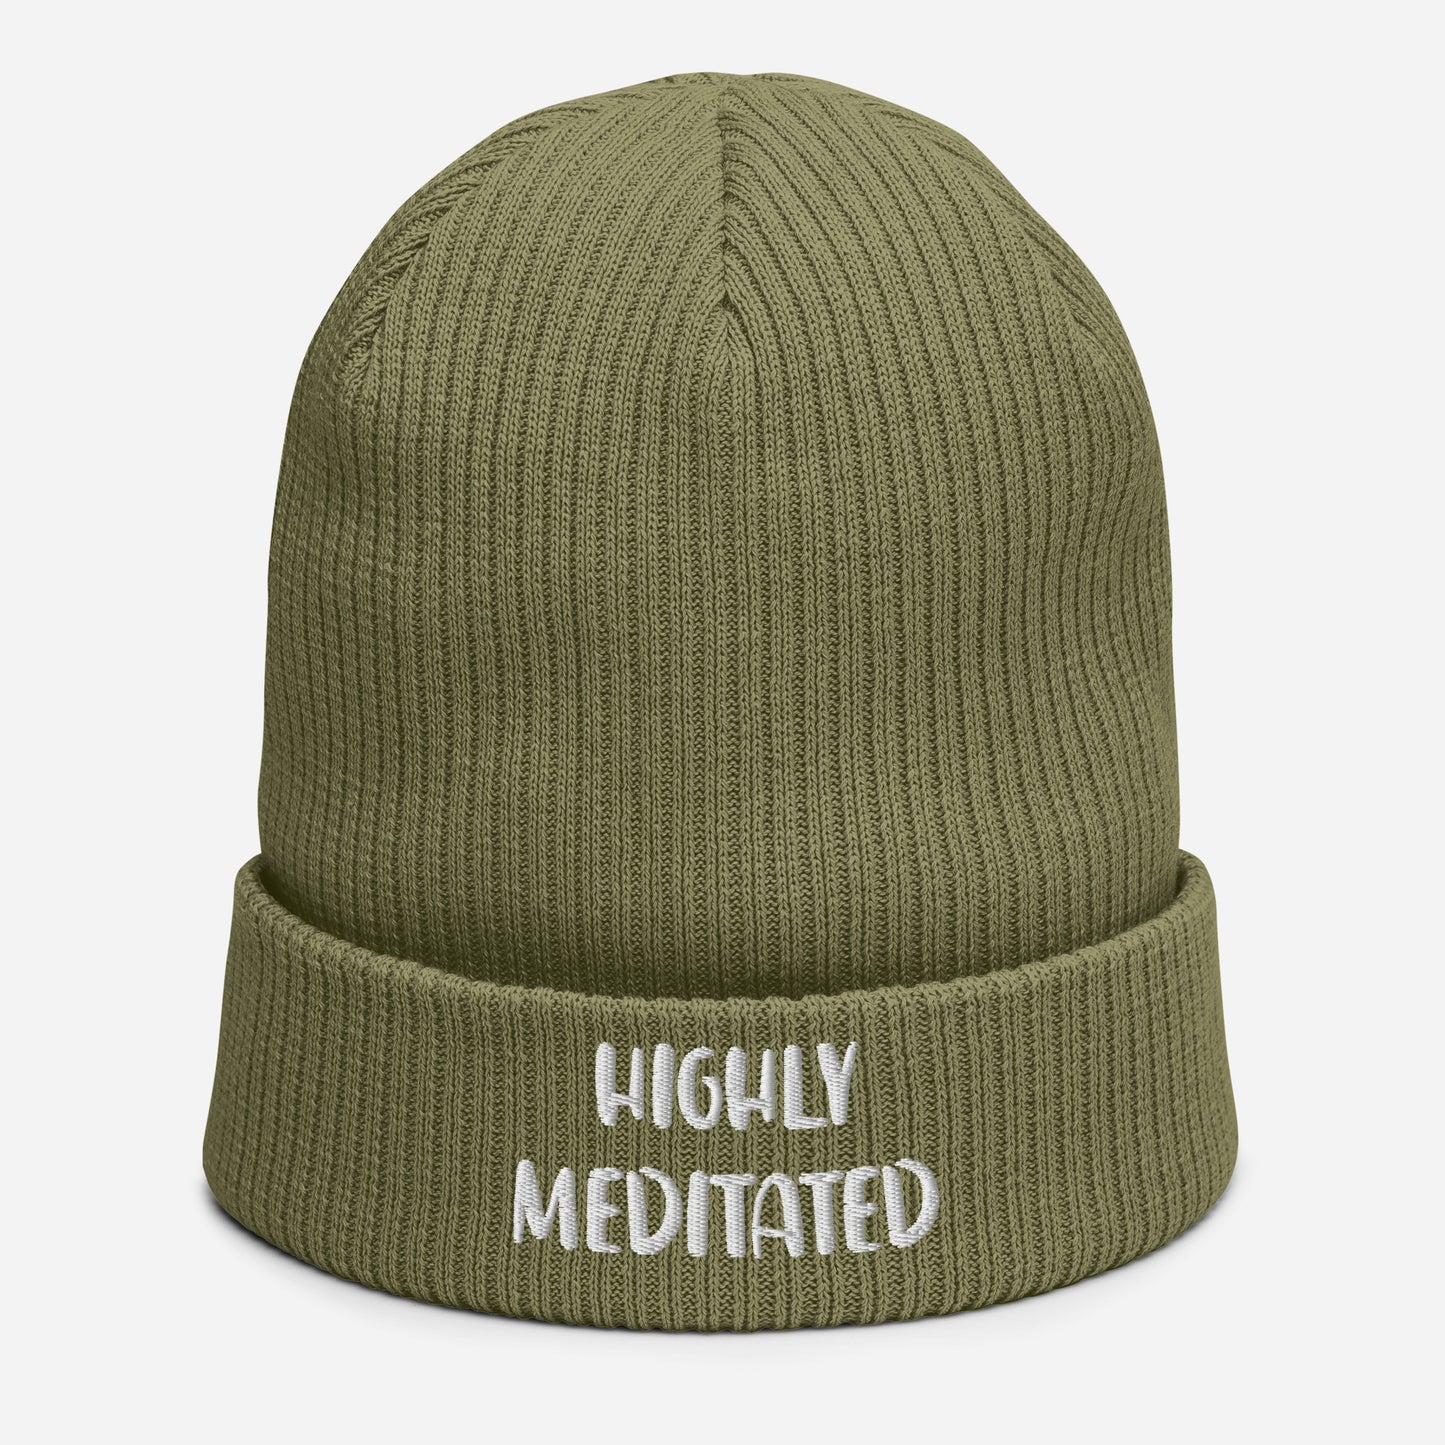 Organic Highly Meditated Beanie